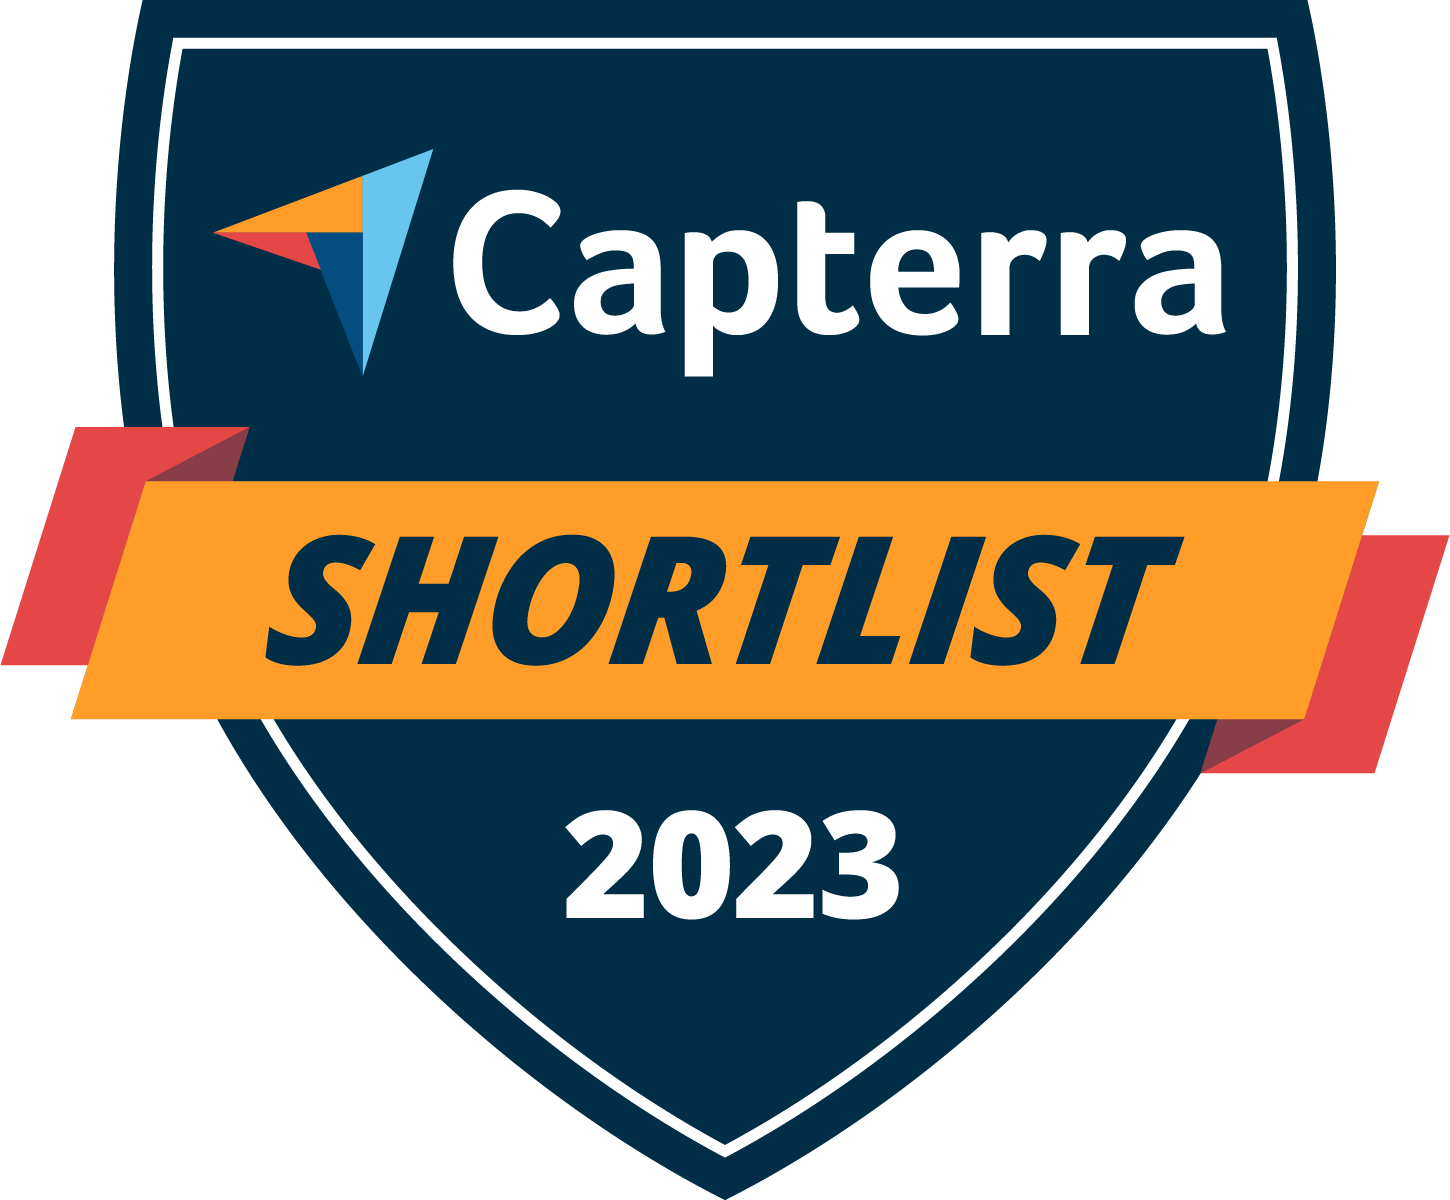 Capterra - SHORTLIST